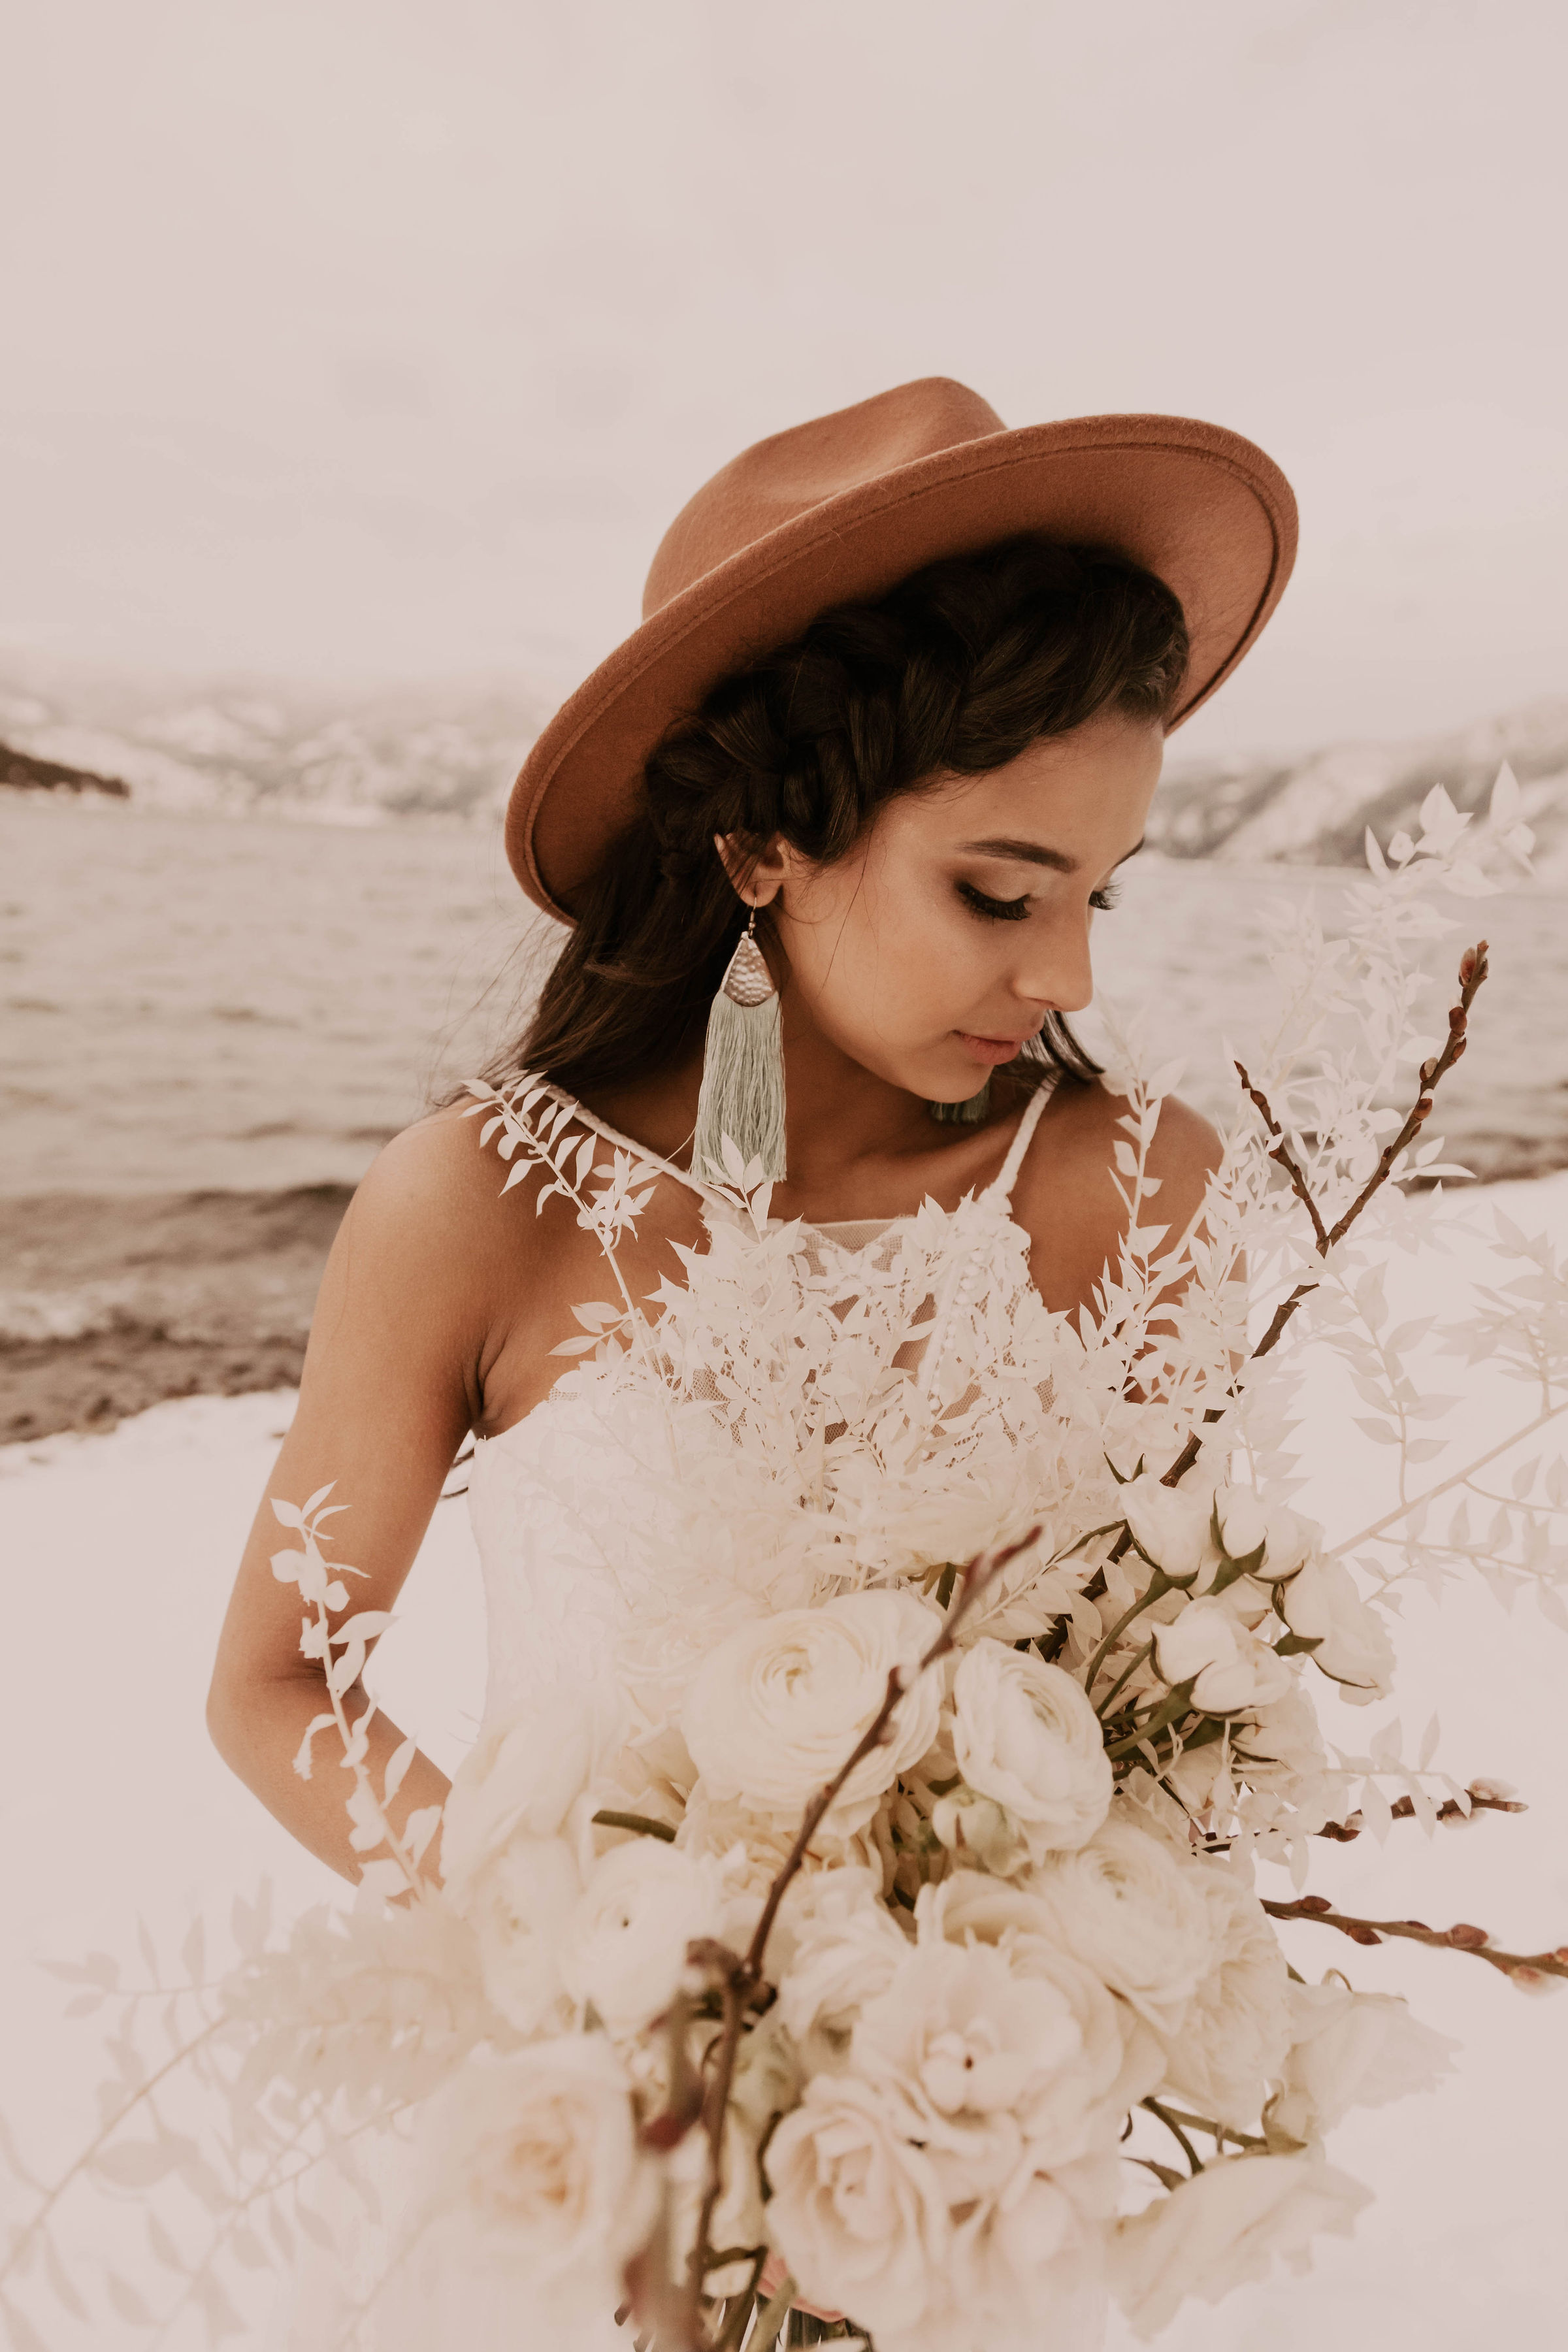 winter bride spokane in brown hat